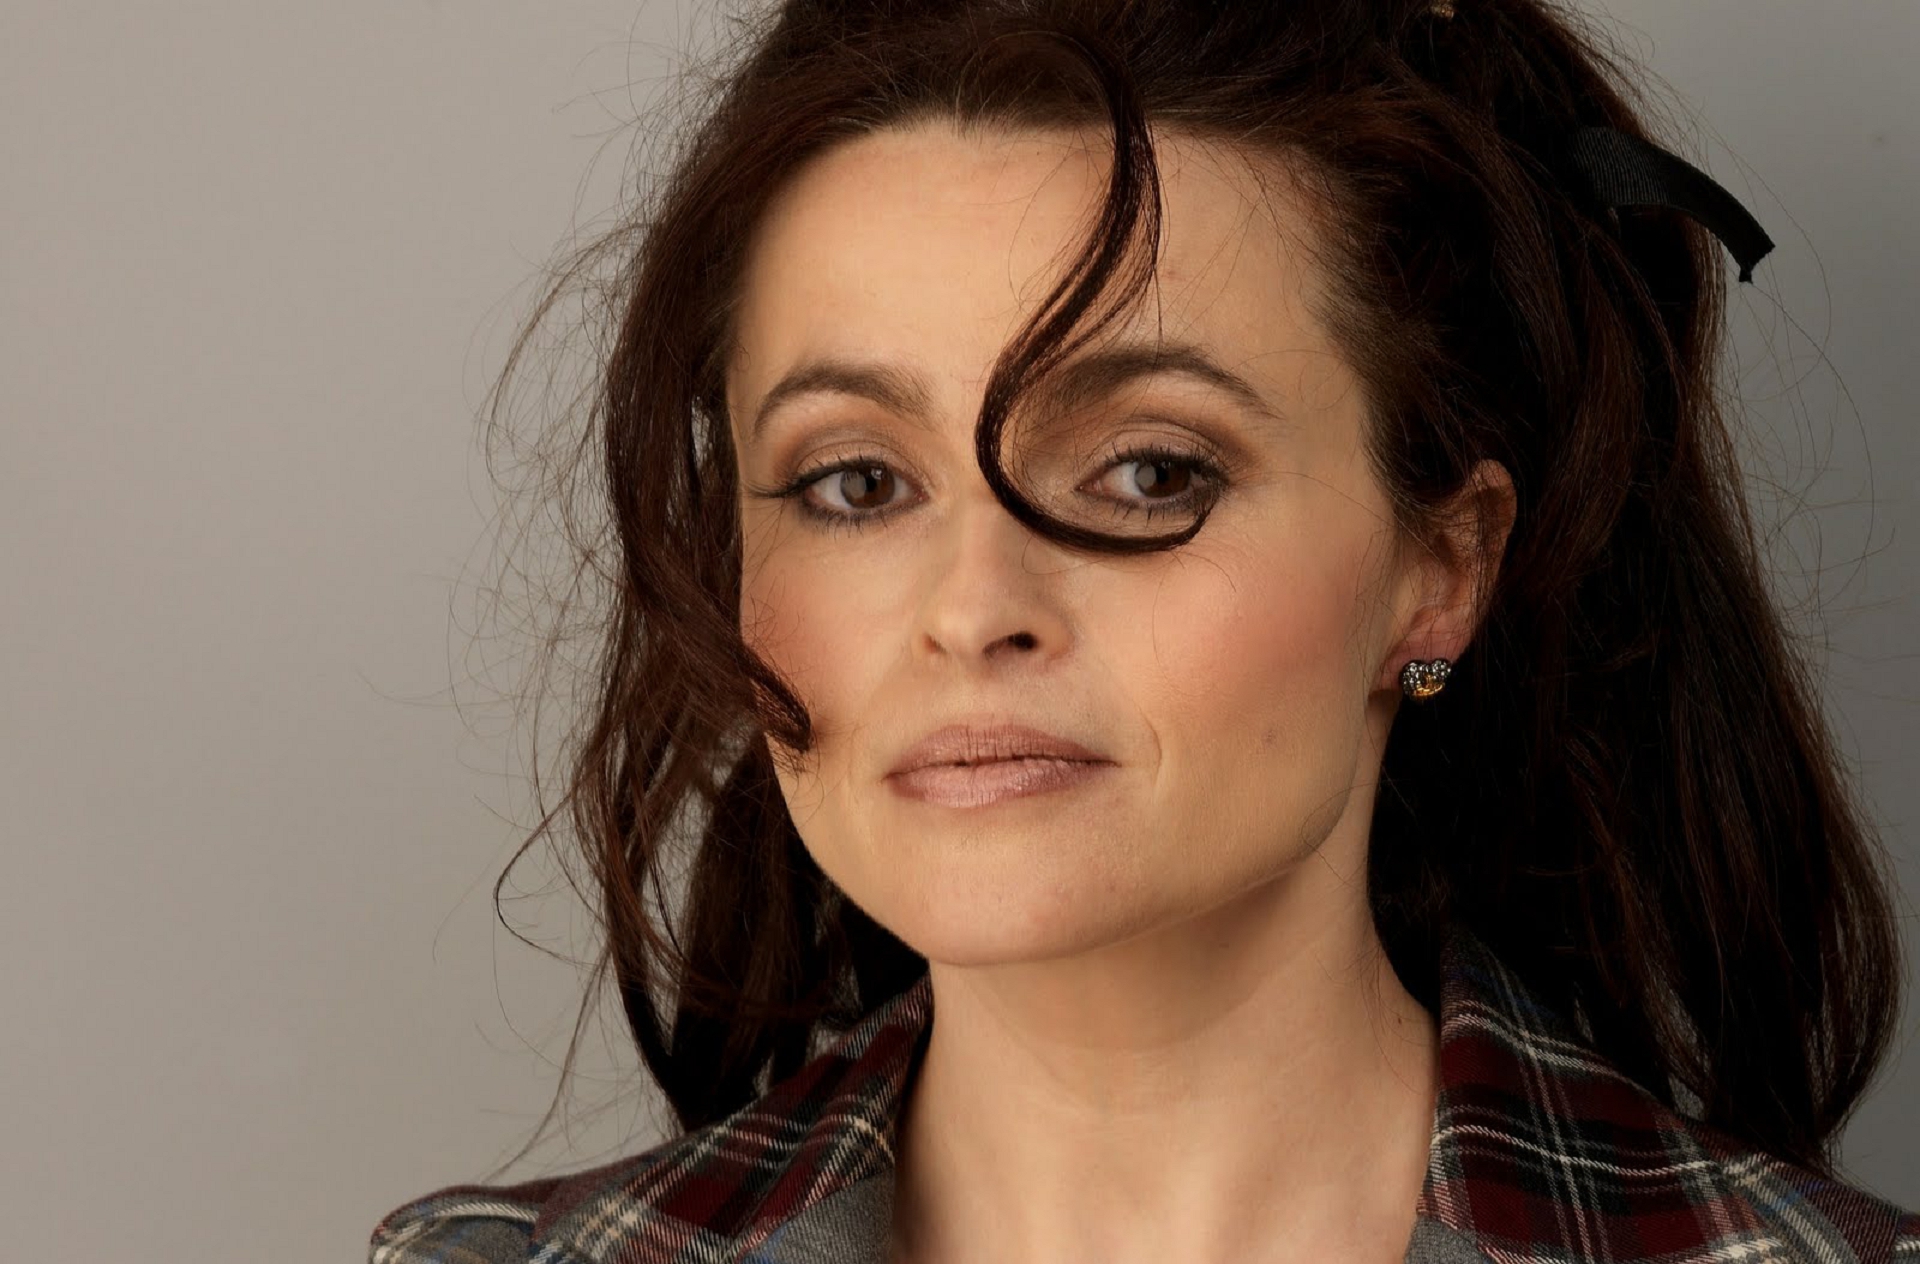 Helena Bonham Carter Wallpaper Image Photo Picture